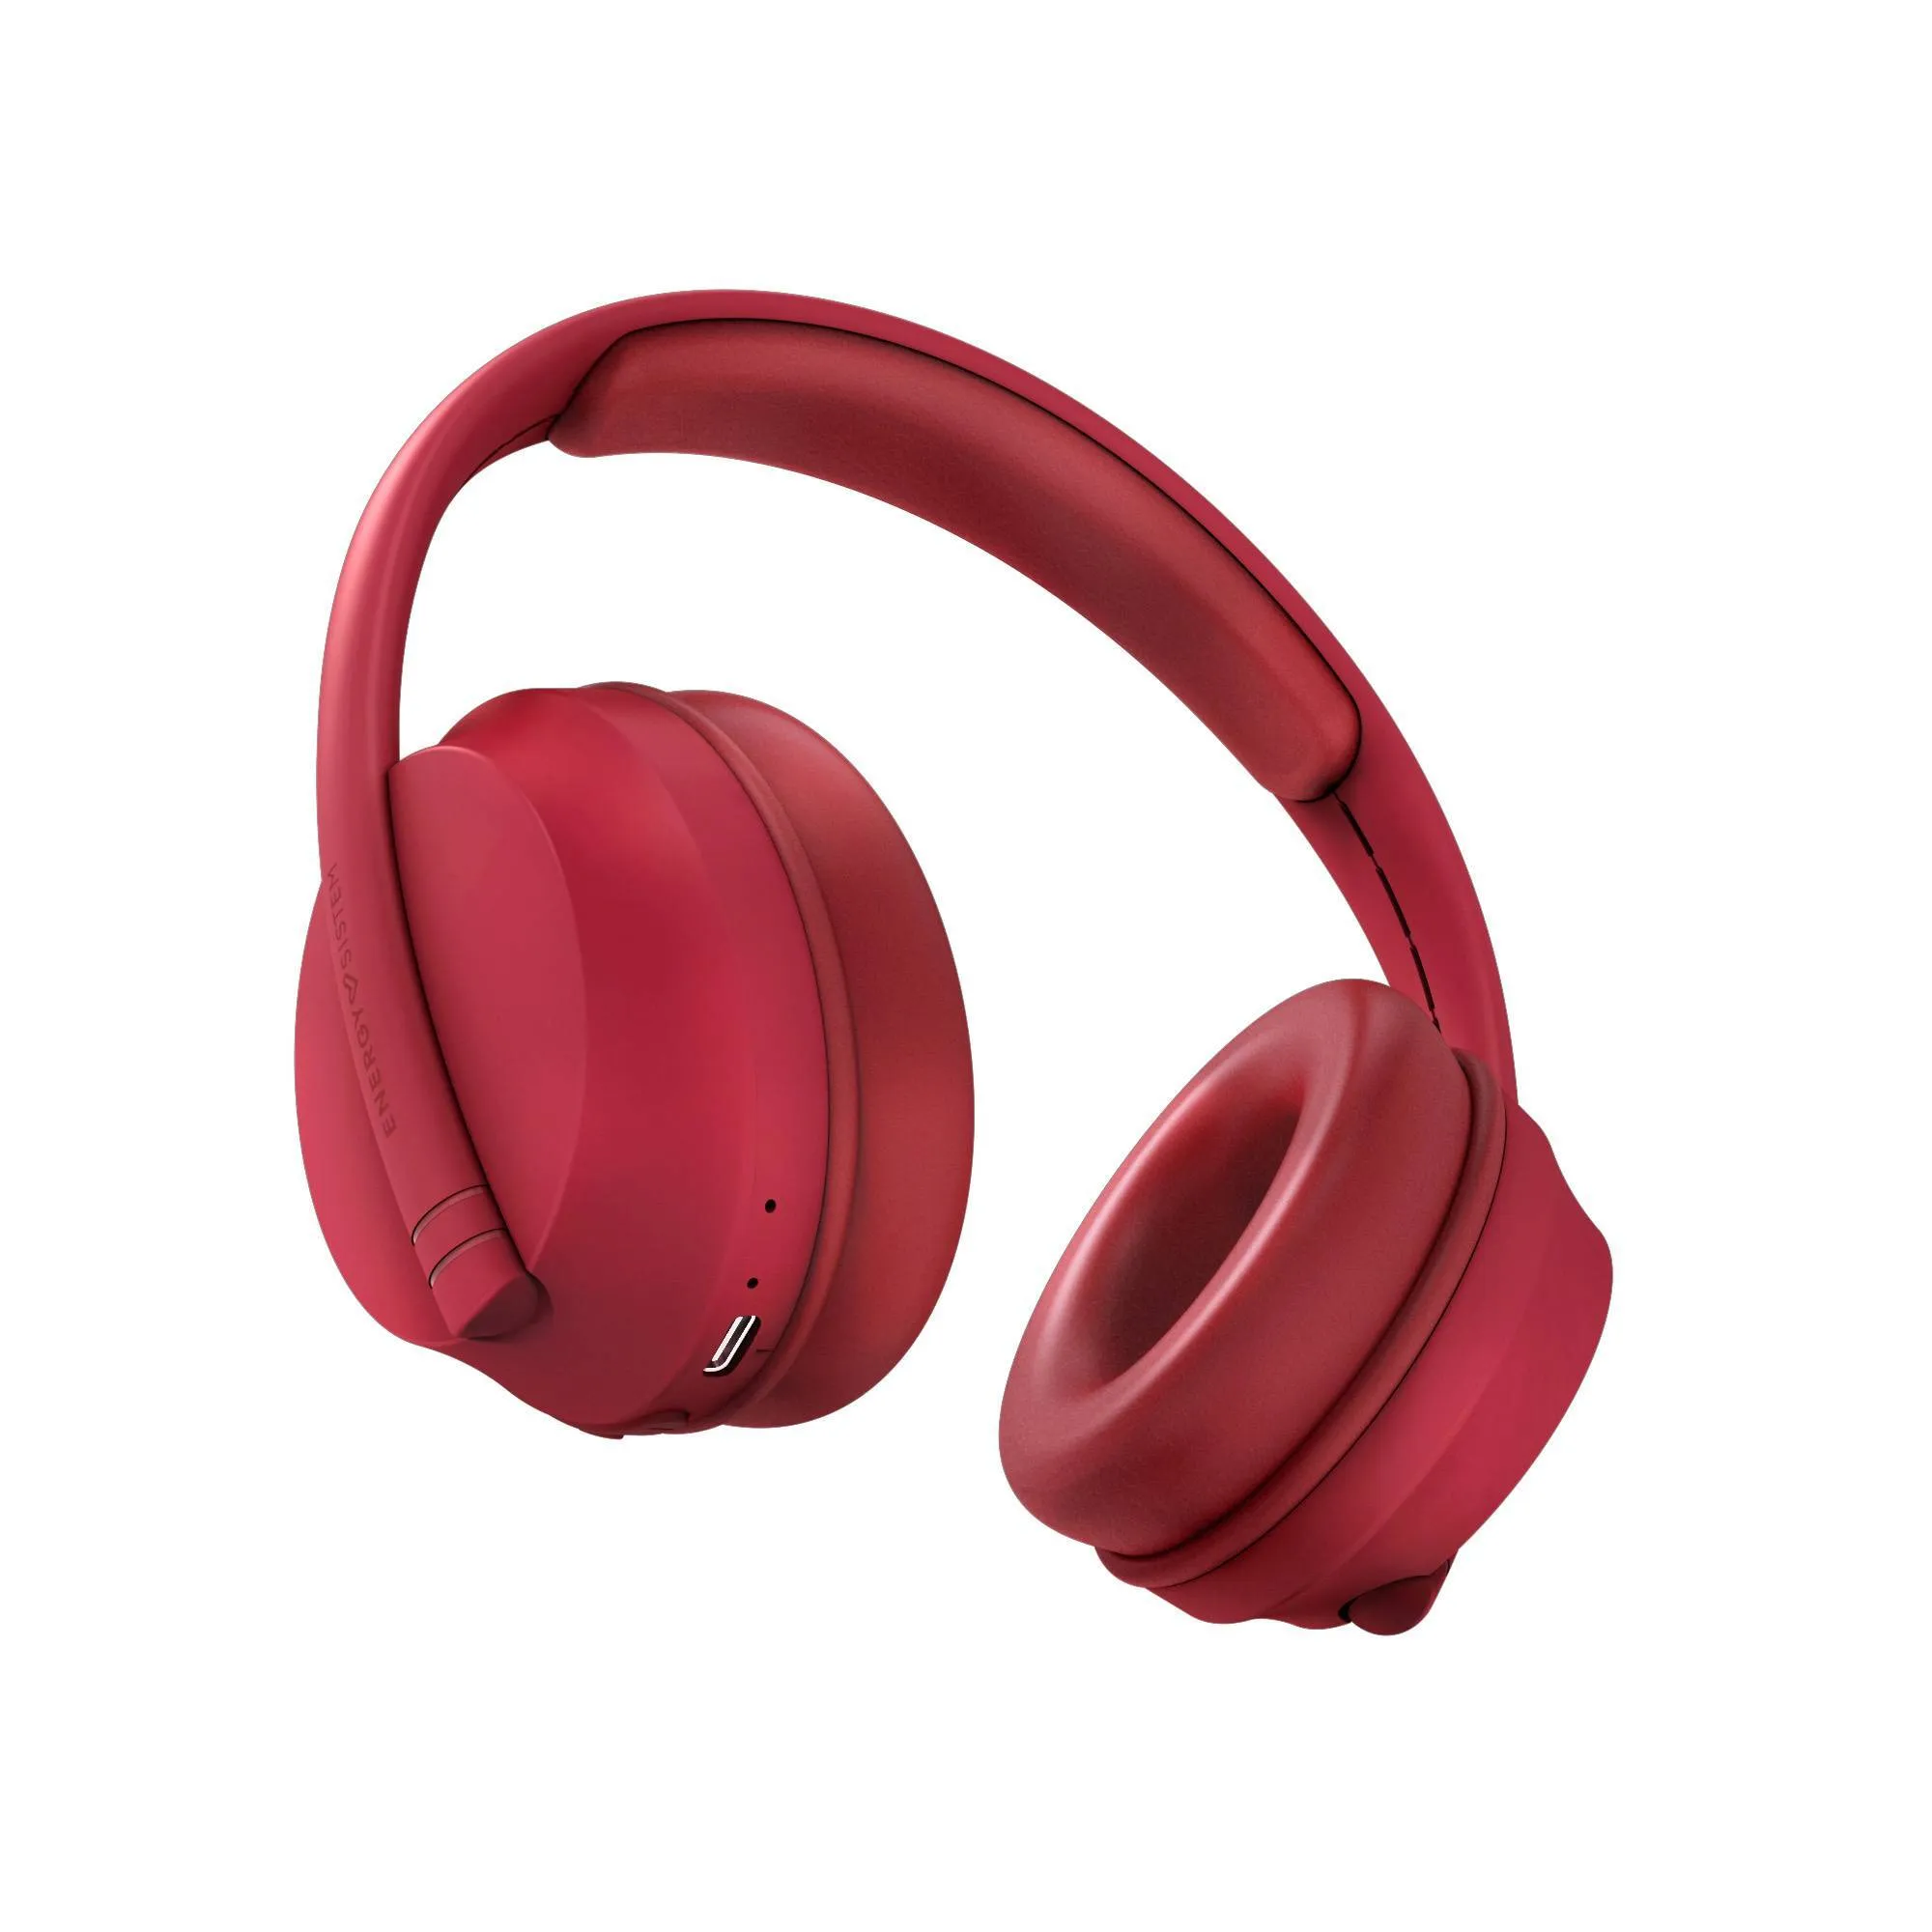 Hoshi Eco - Bluetooth headphones